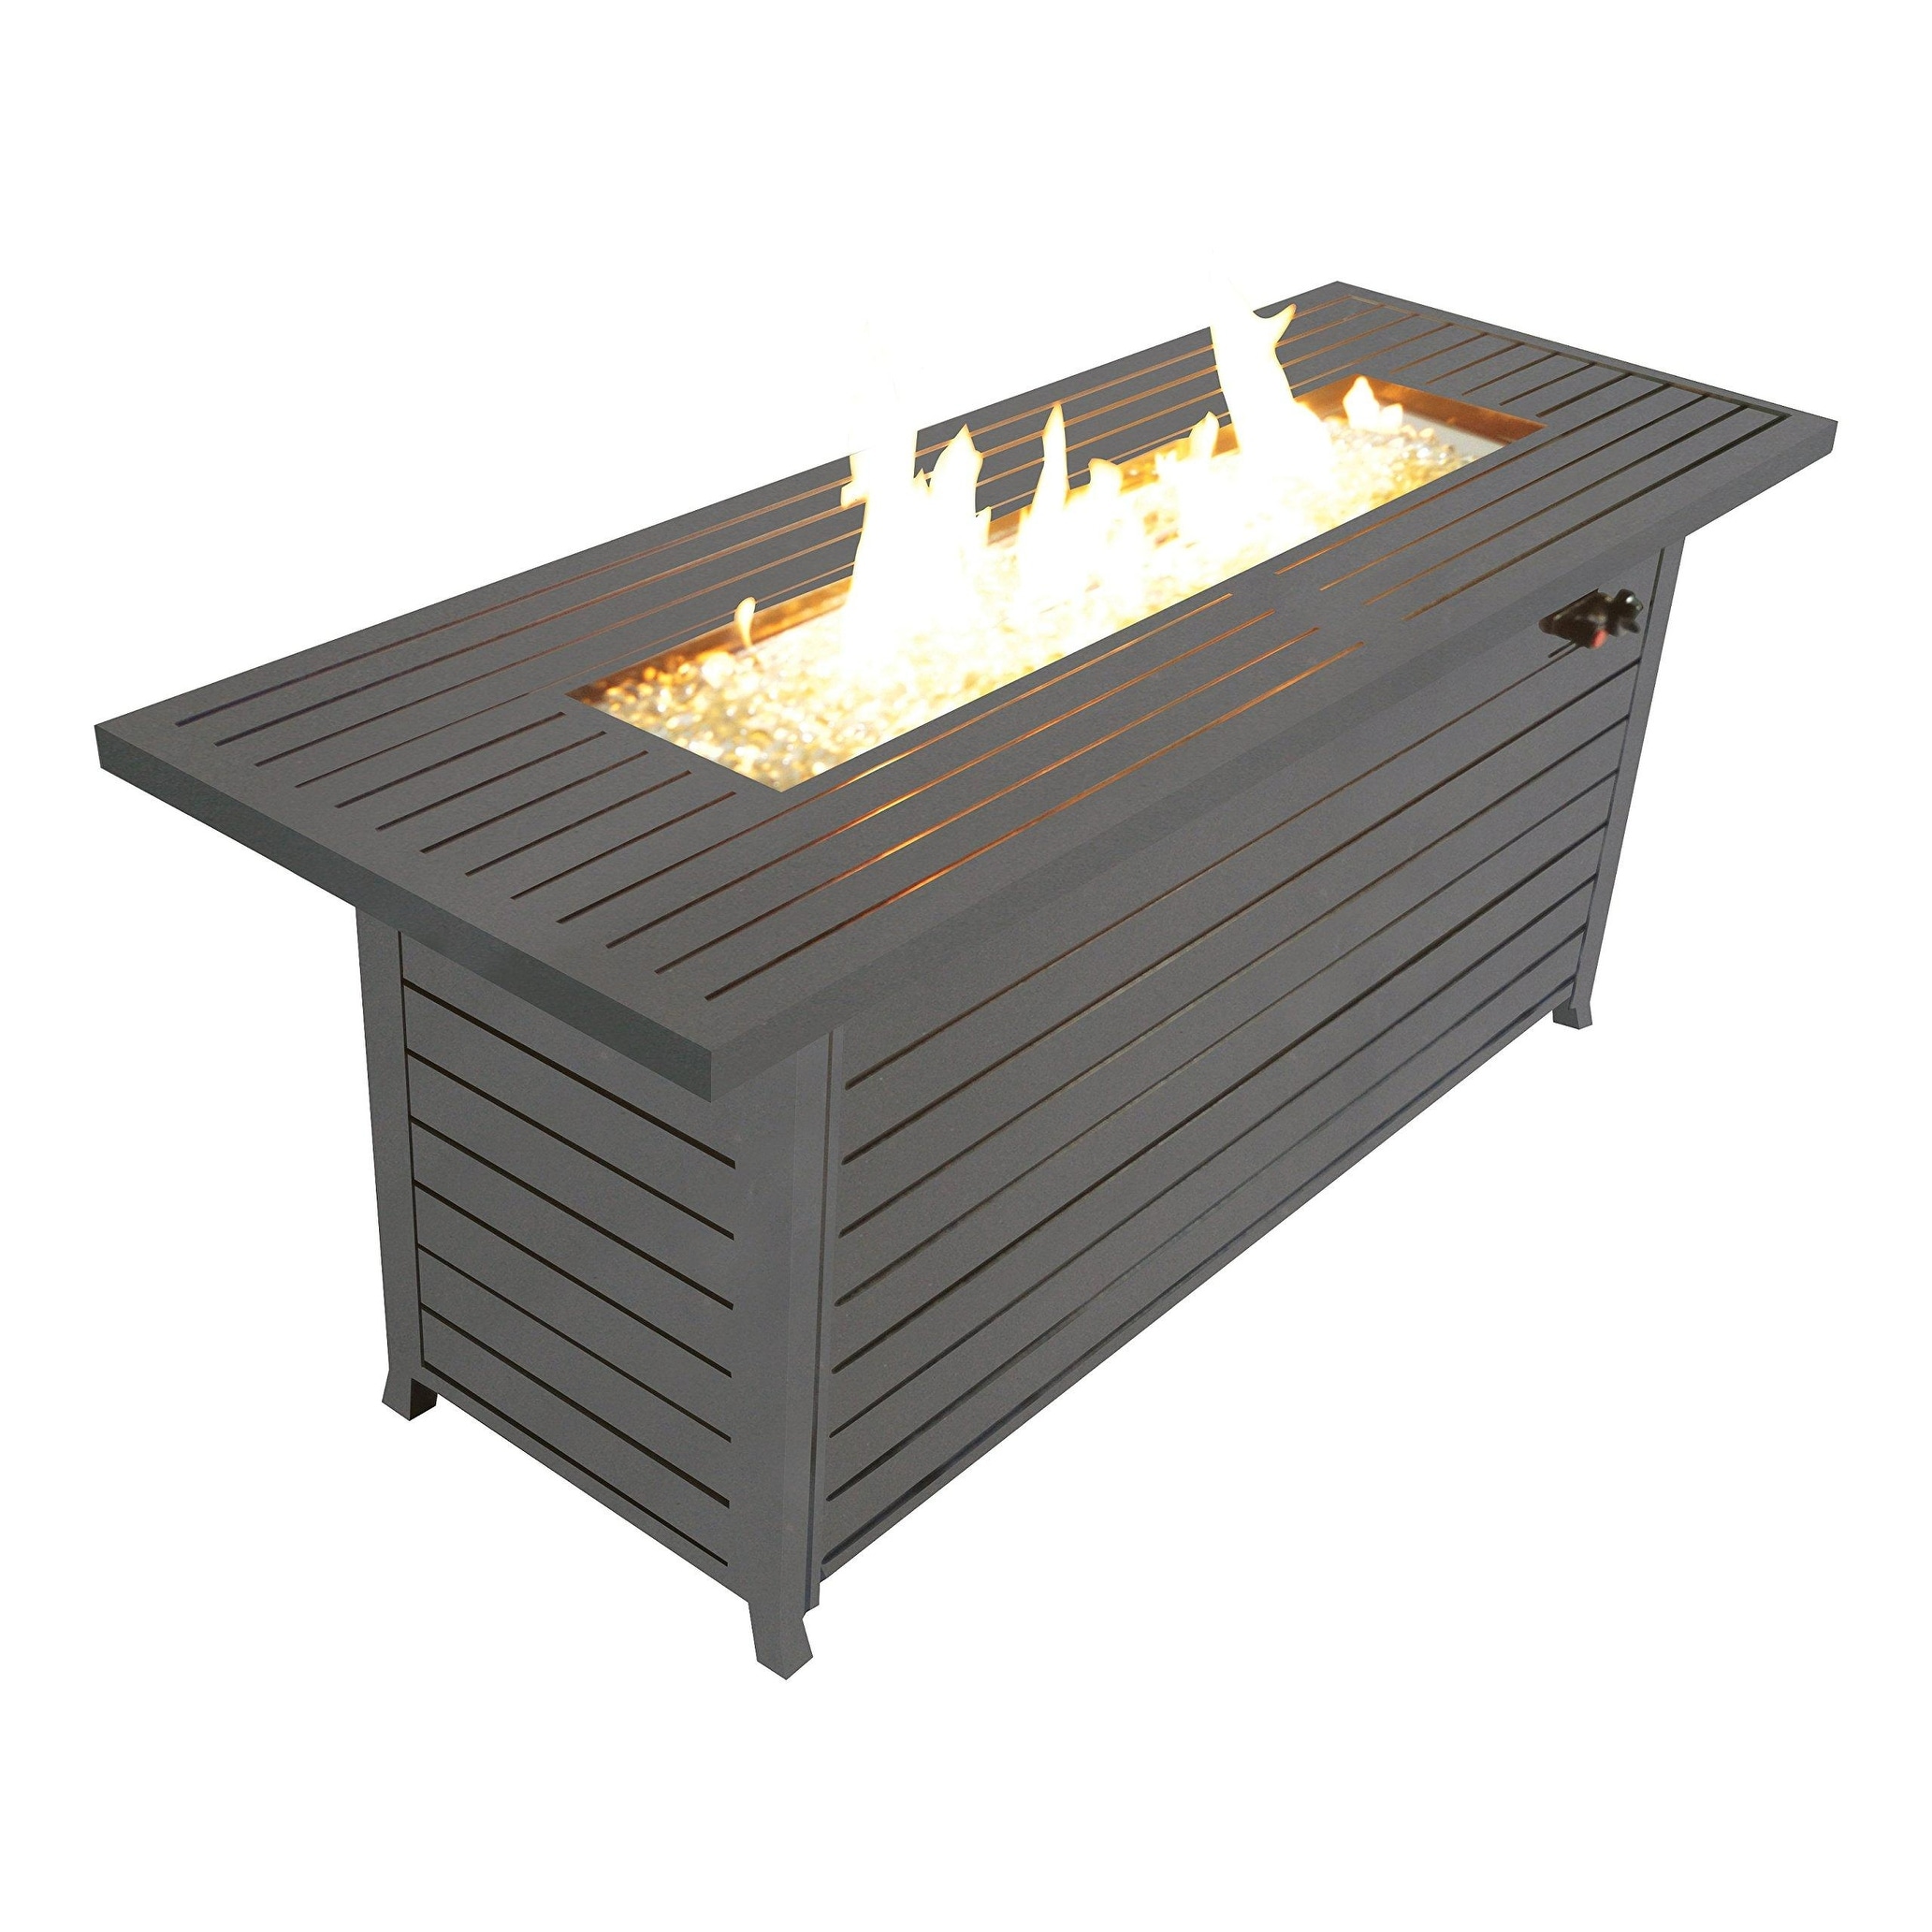 IGEMAN 57in Outdoor Retangular Durable Aluminum 50000BTU Gas Propane Fire Pit Table with Slats Looking, Lid, Fire Glass for Backyard